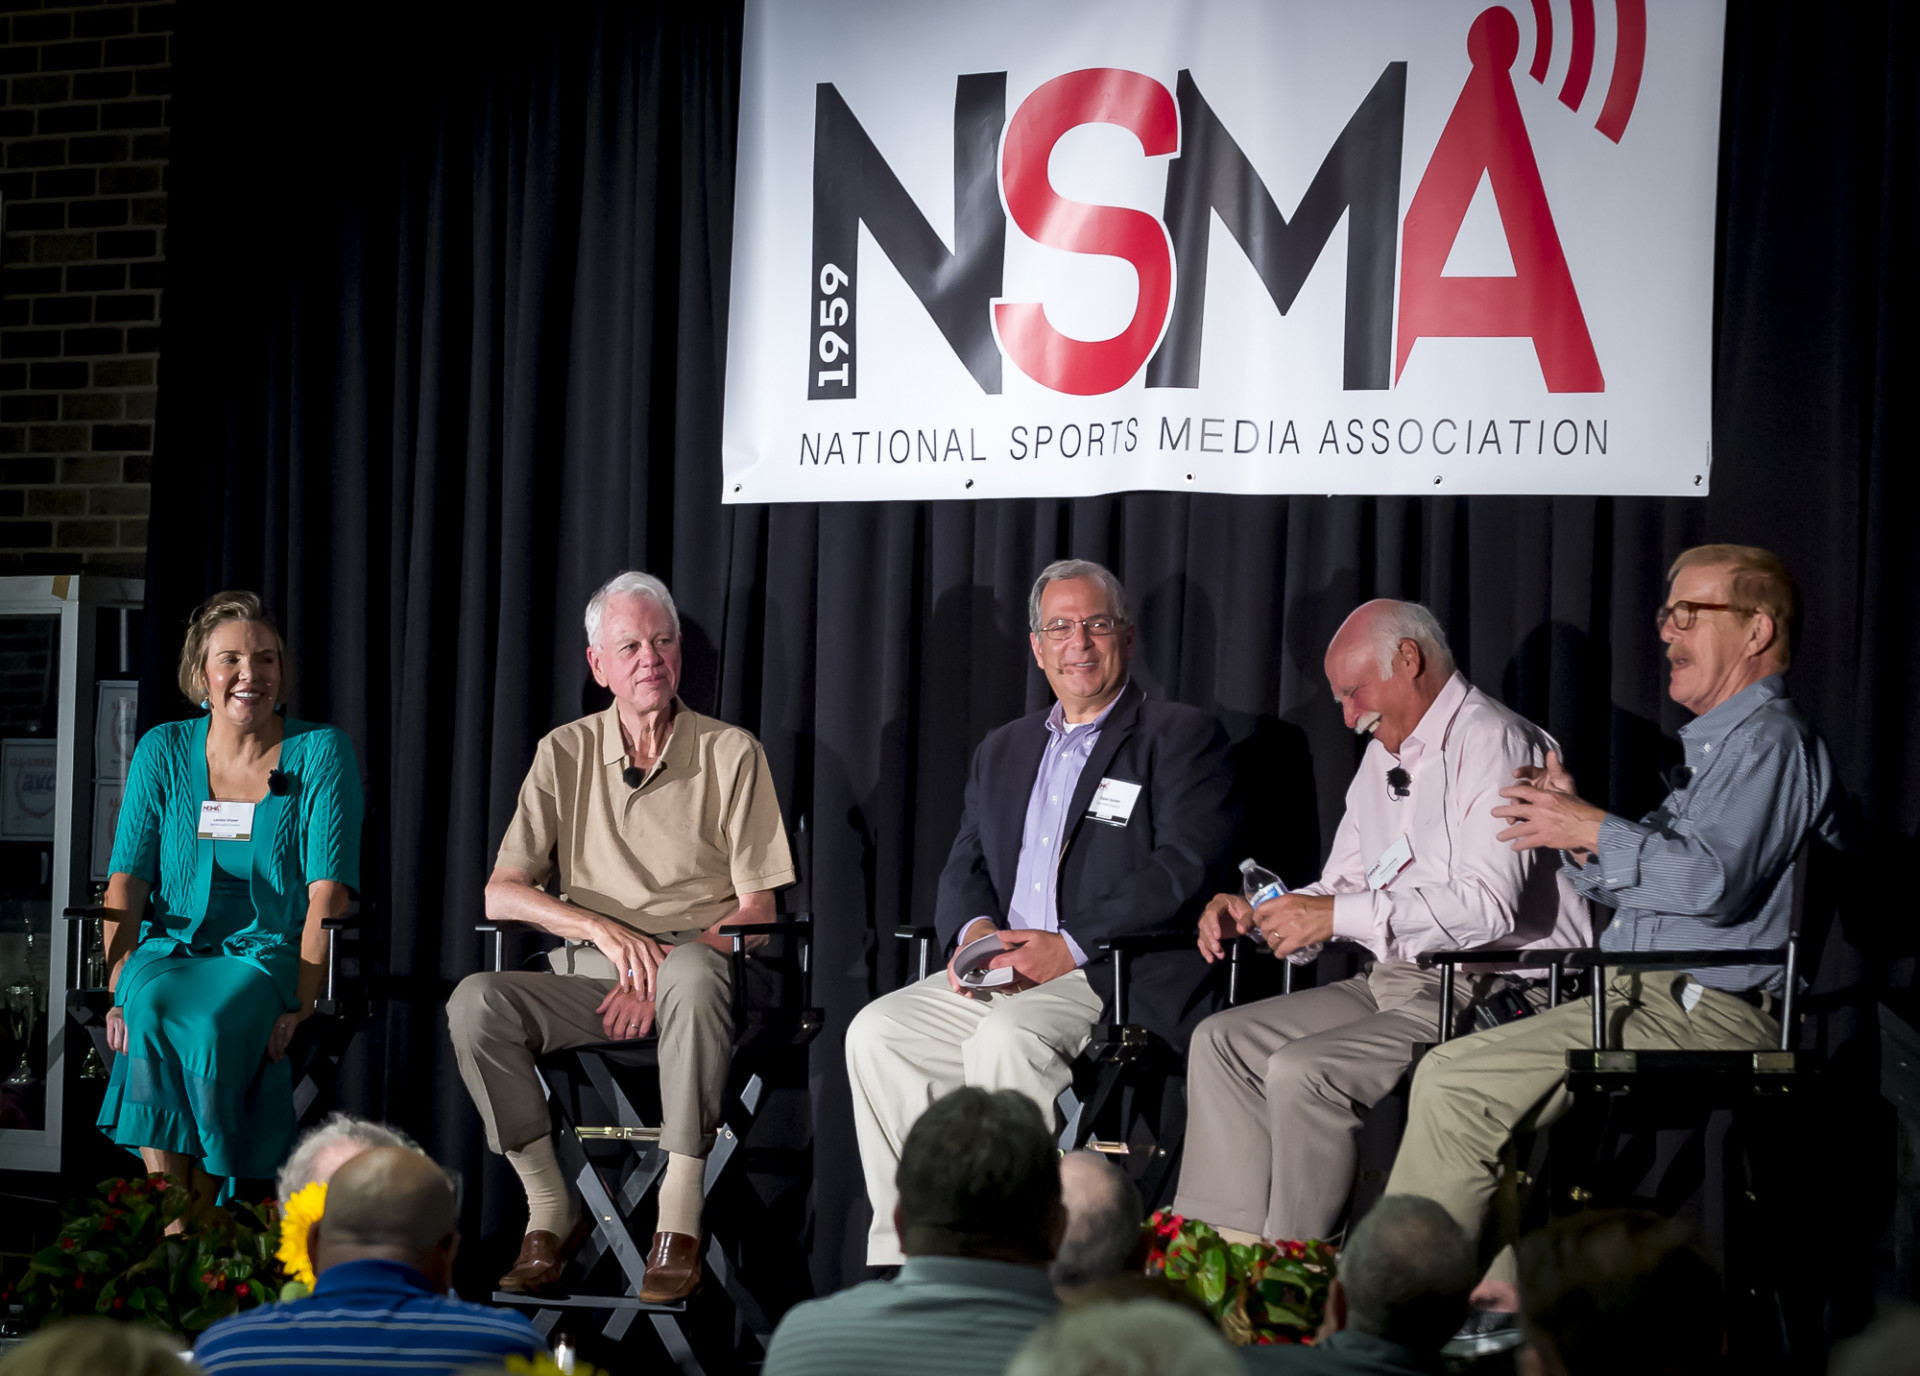 NSMA executive director Dave Goren (center), with Boston Globe alumni (from left) Lesley Visser, Bob Ryan, Vince Doria and Leigh Montville